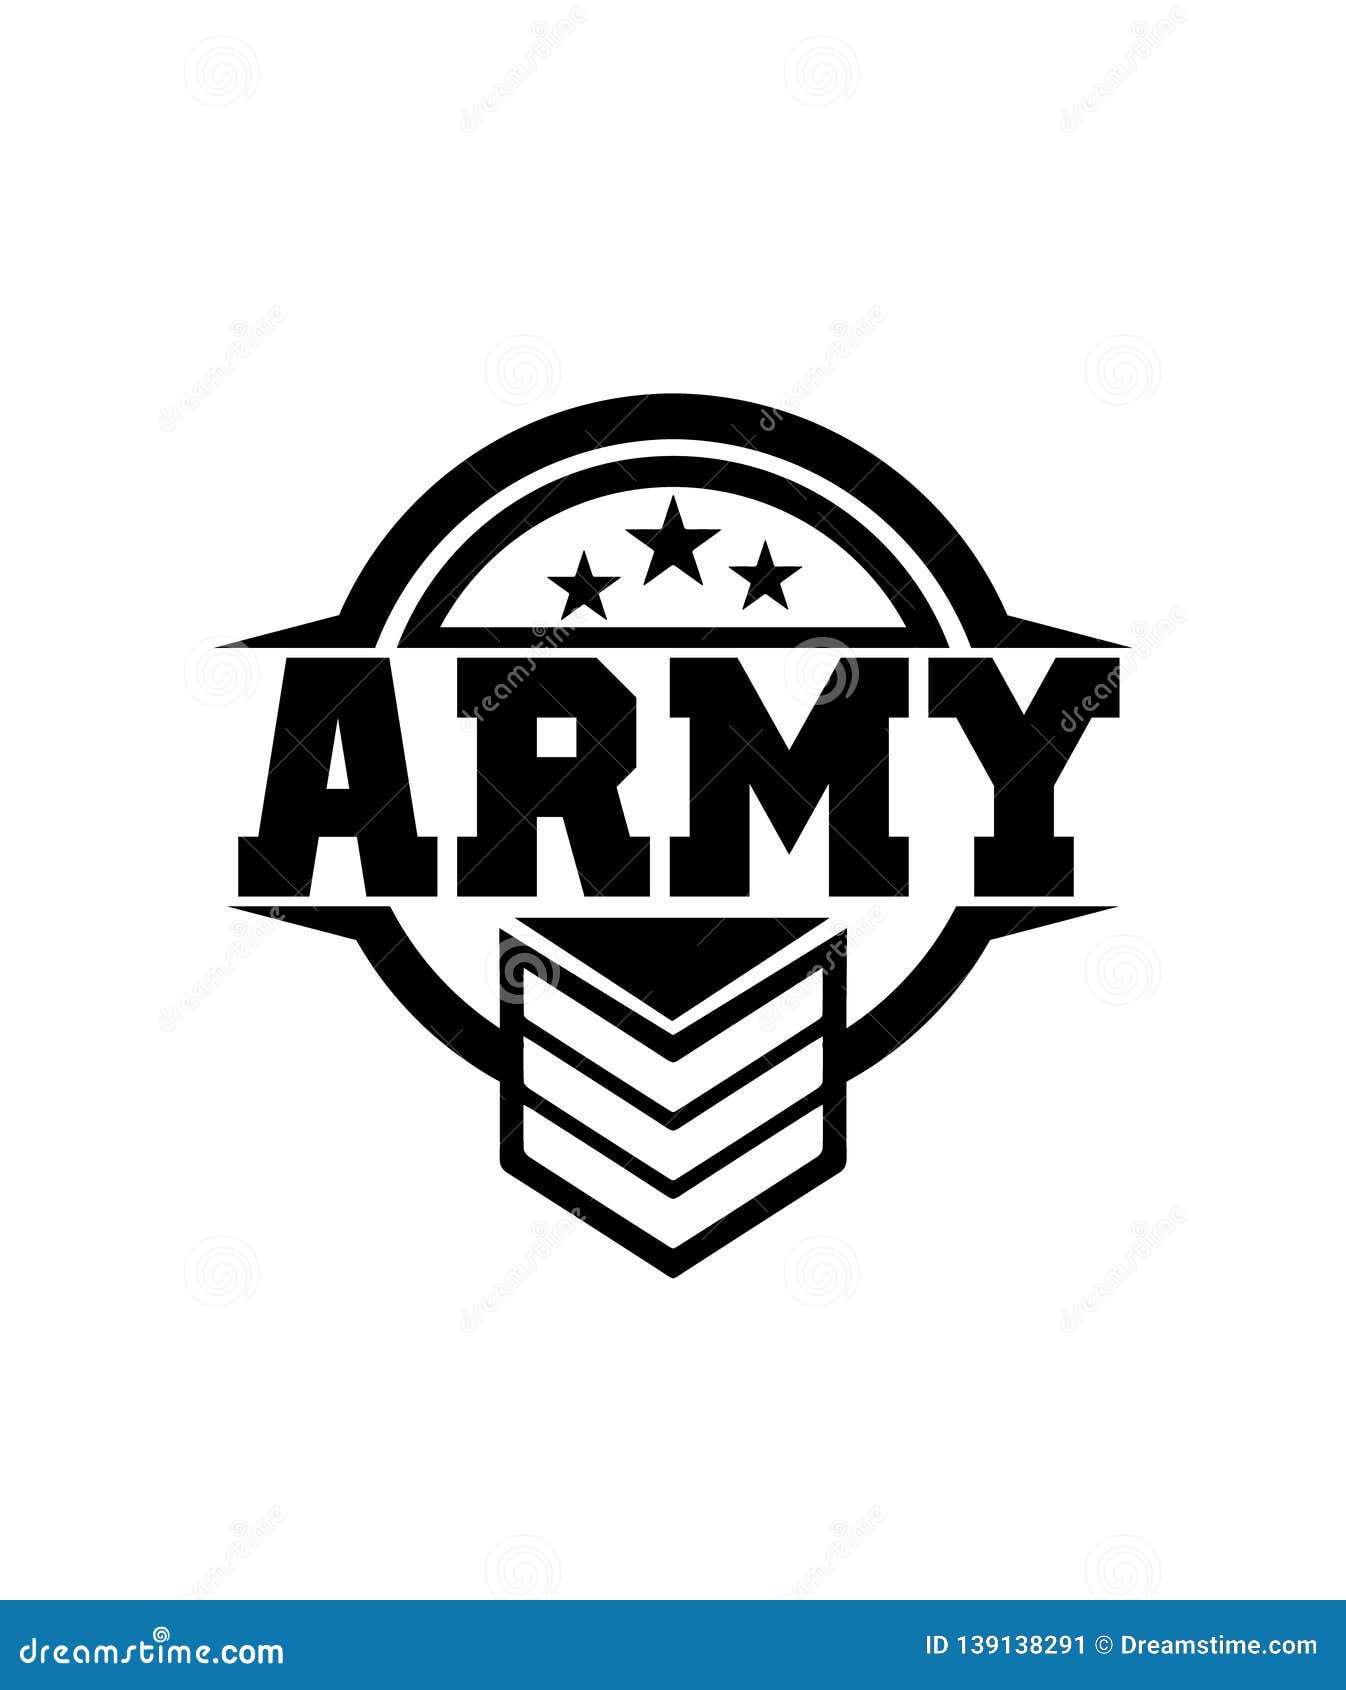 Logo Design Army Veser Vtngcf Org